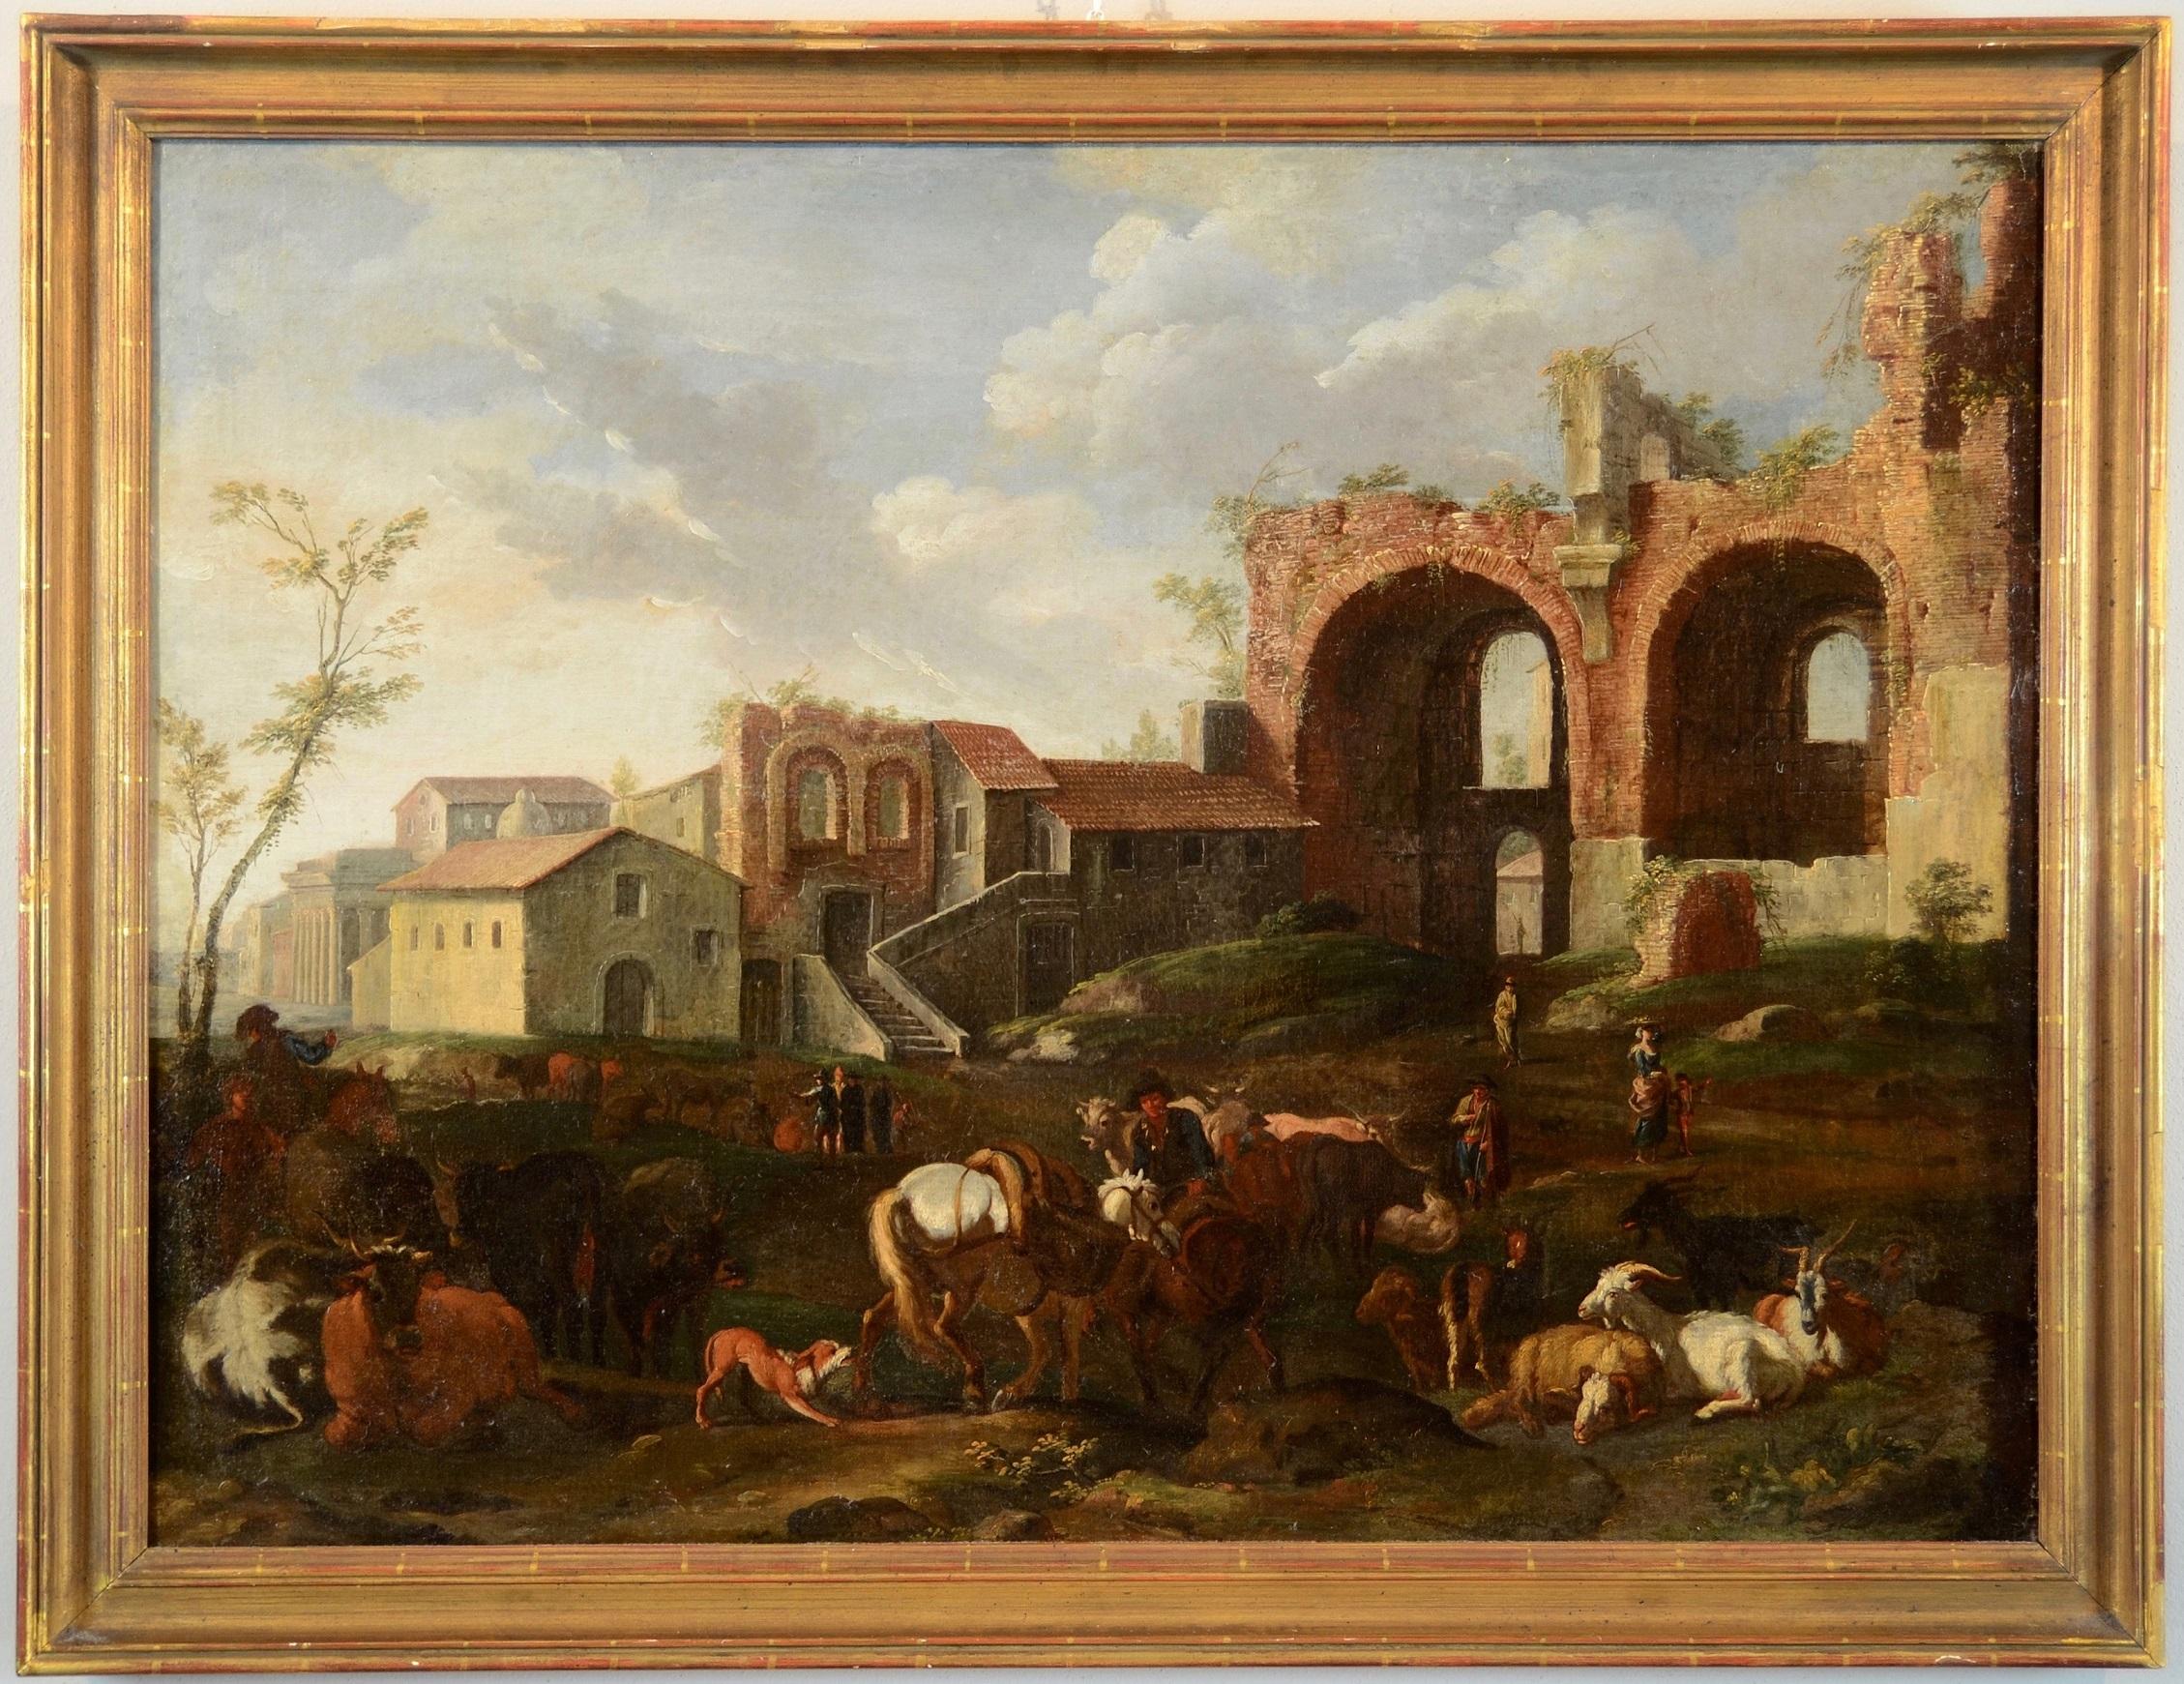 Van Bloemen Rome Landscape Paint Oil on canvas 17/18th Century Old master Italy - Painting by Pieter Van Bloemen (1674-1720)